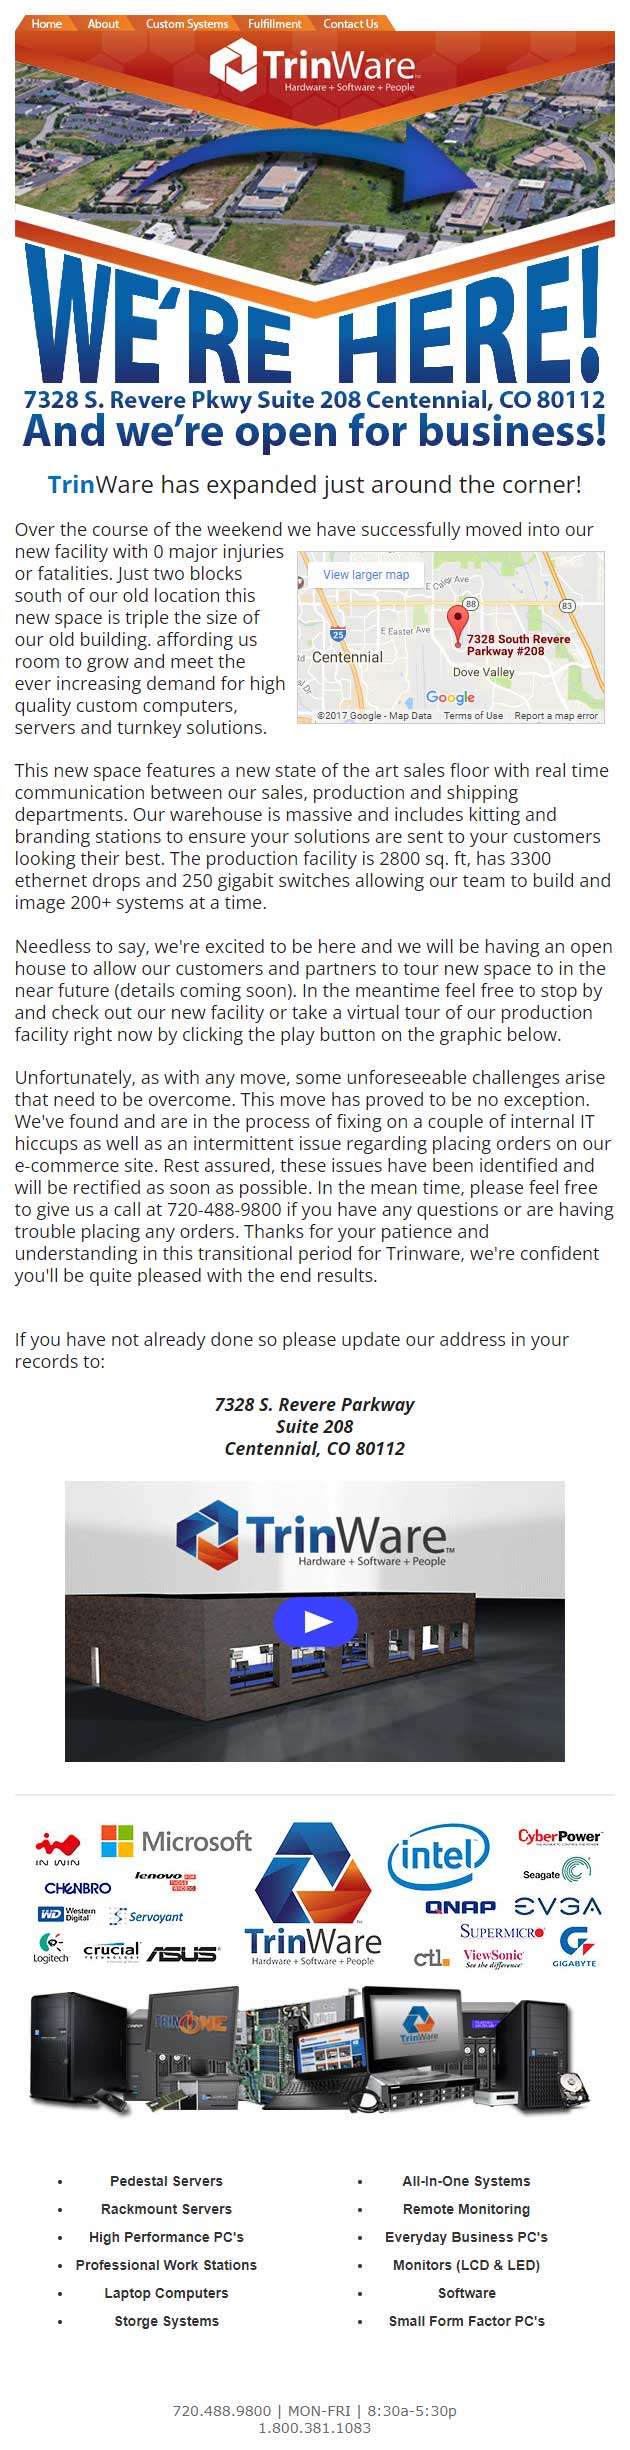 Trinware-Email-Marketing